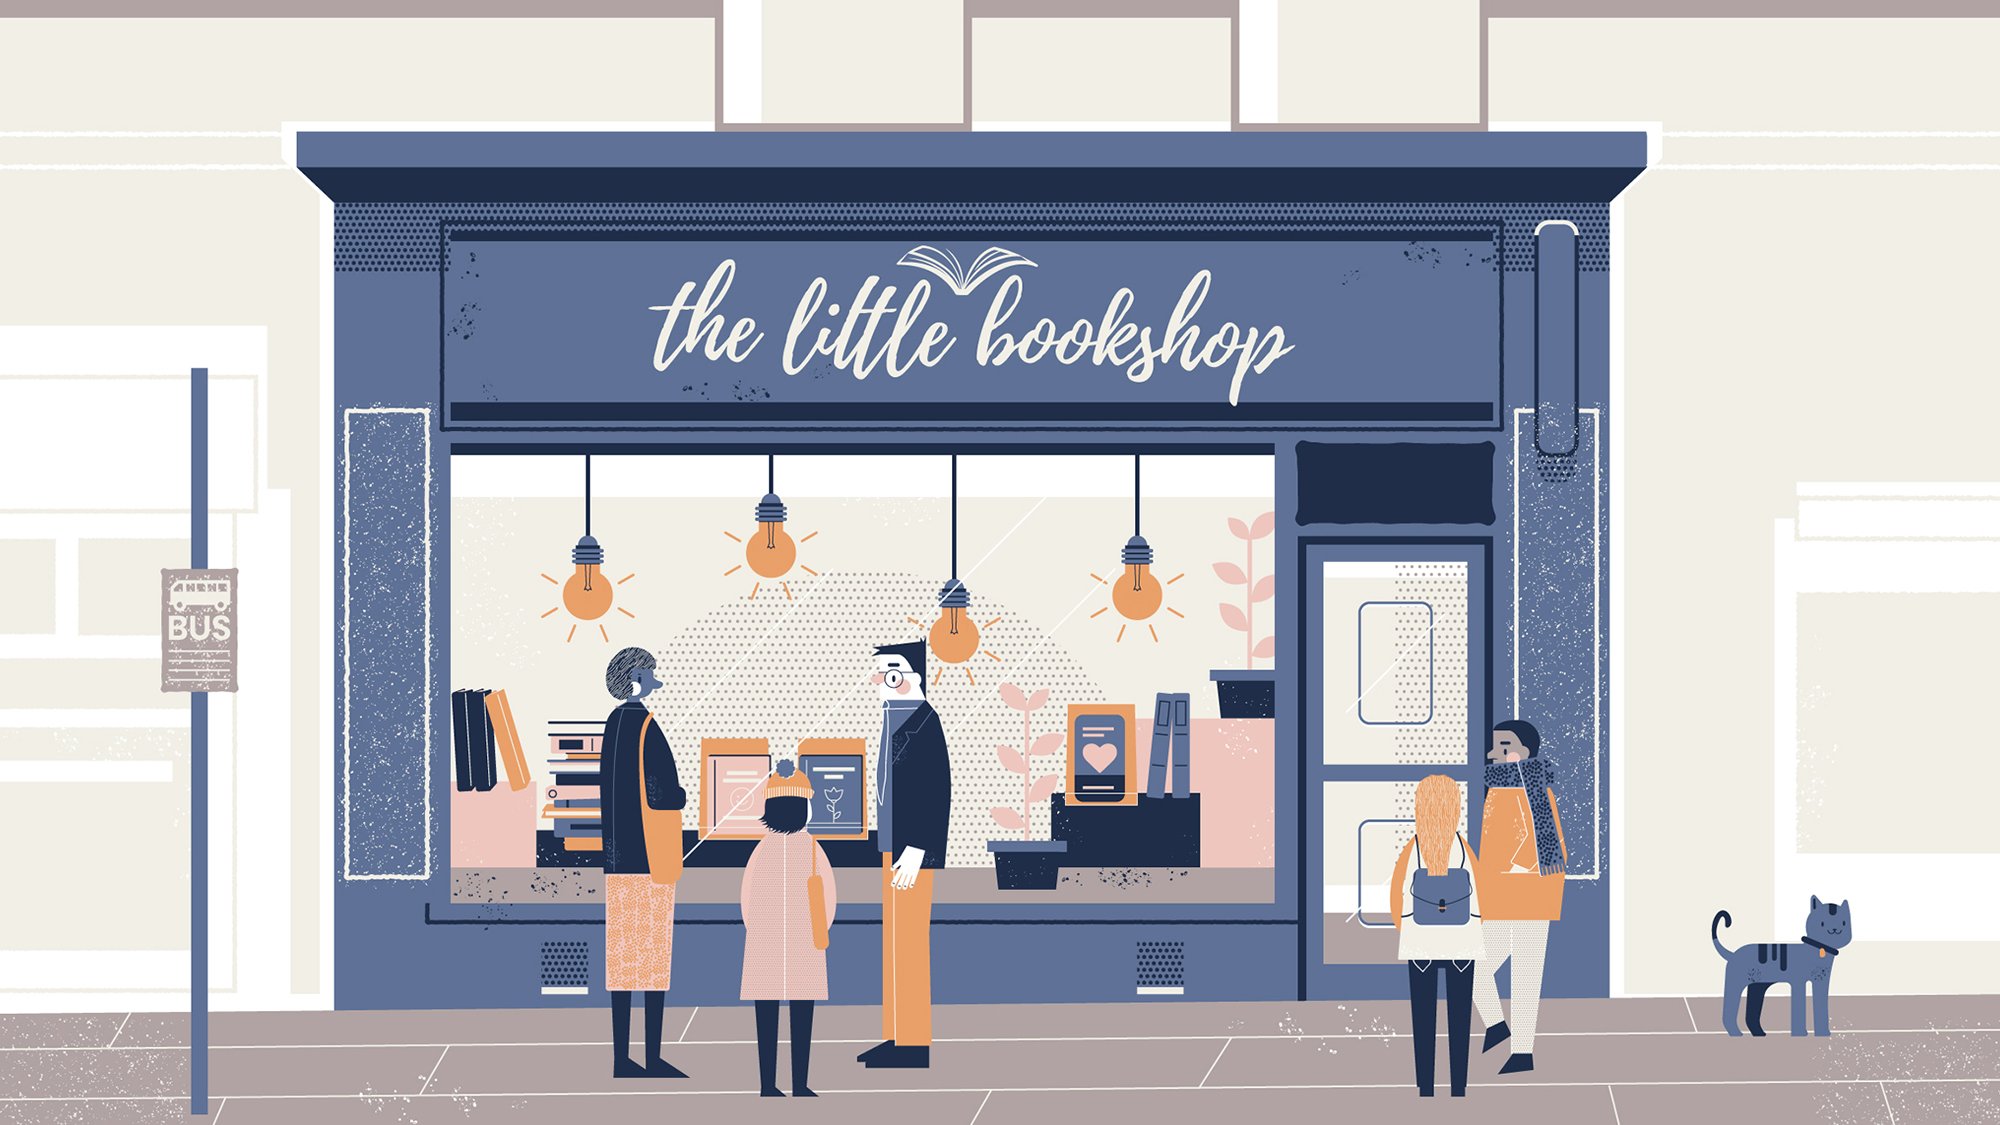 The Little Bookshop